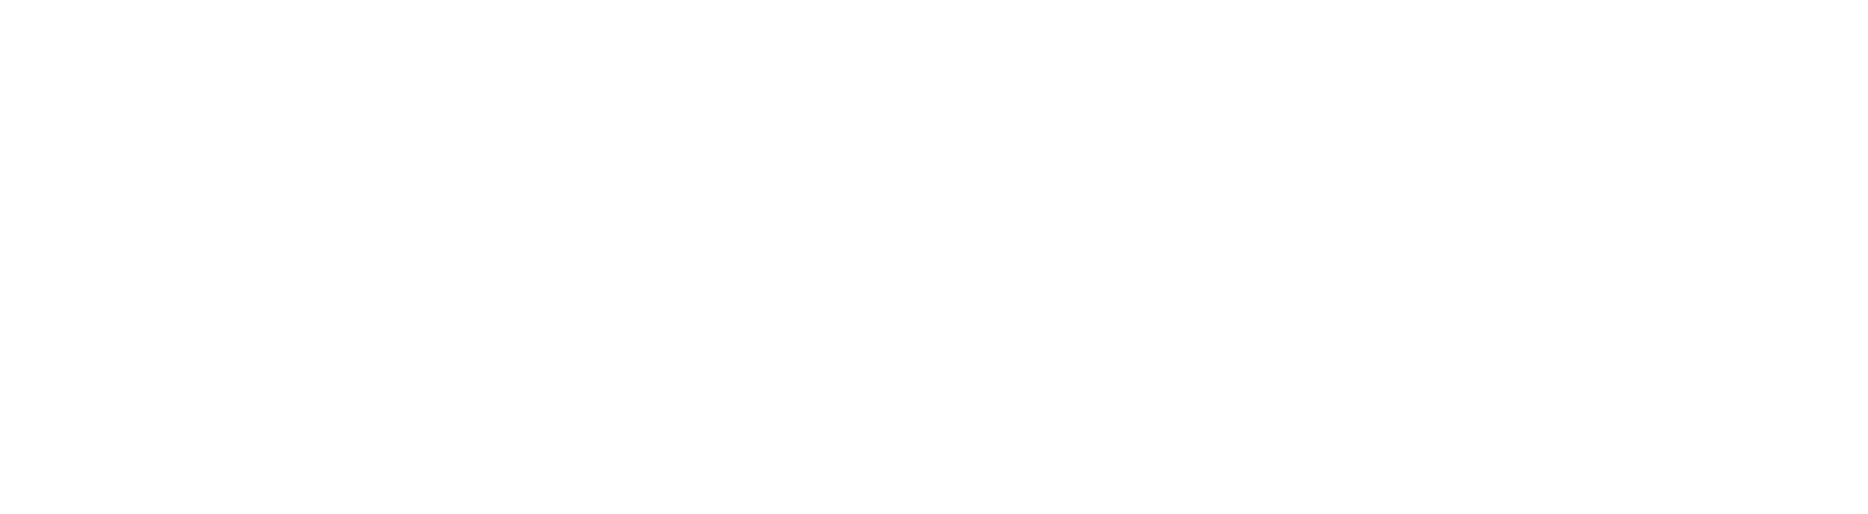 DentaCare logotipo Negativo